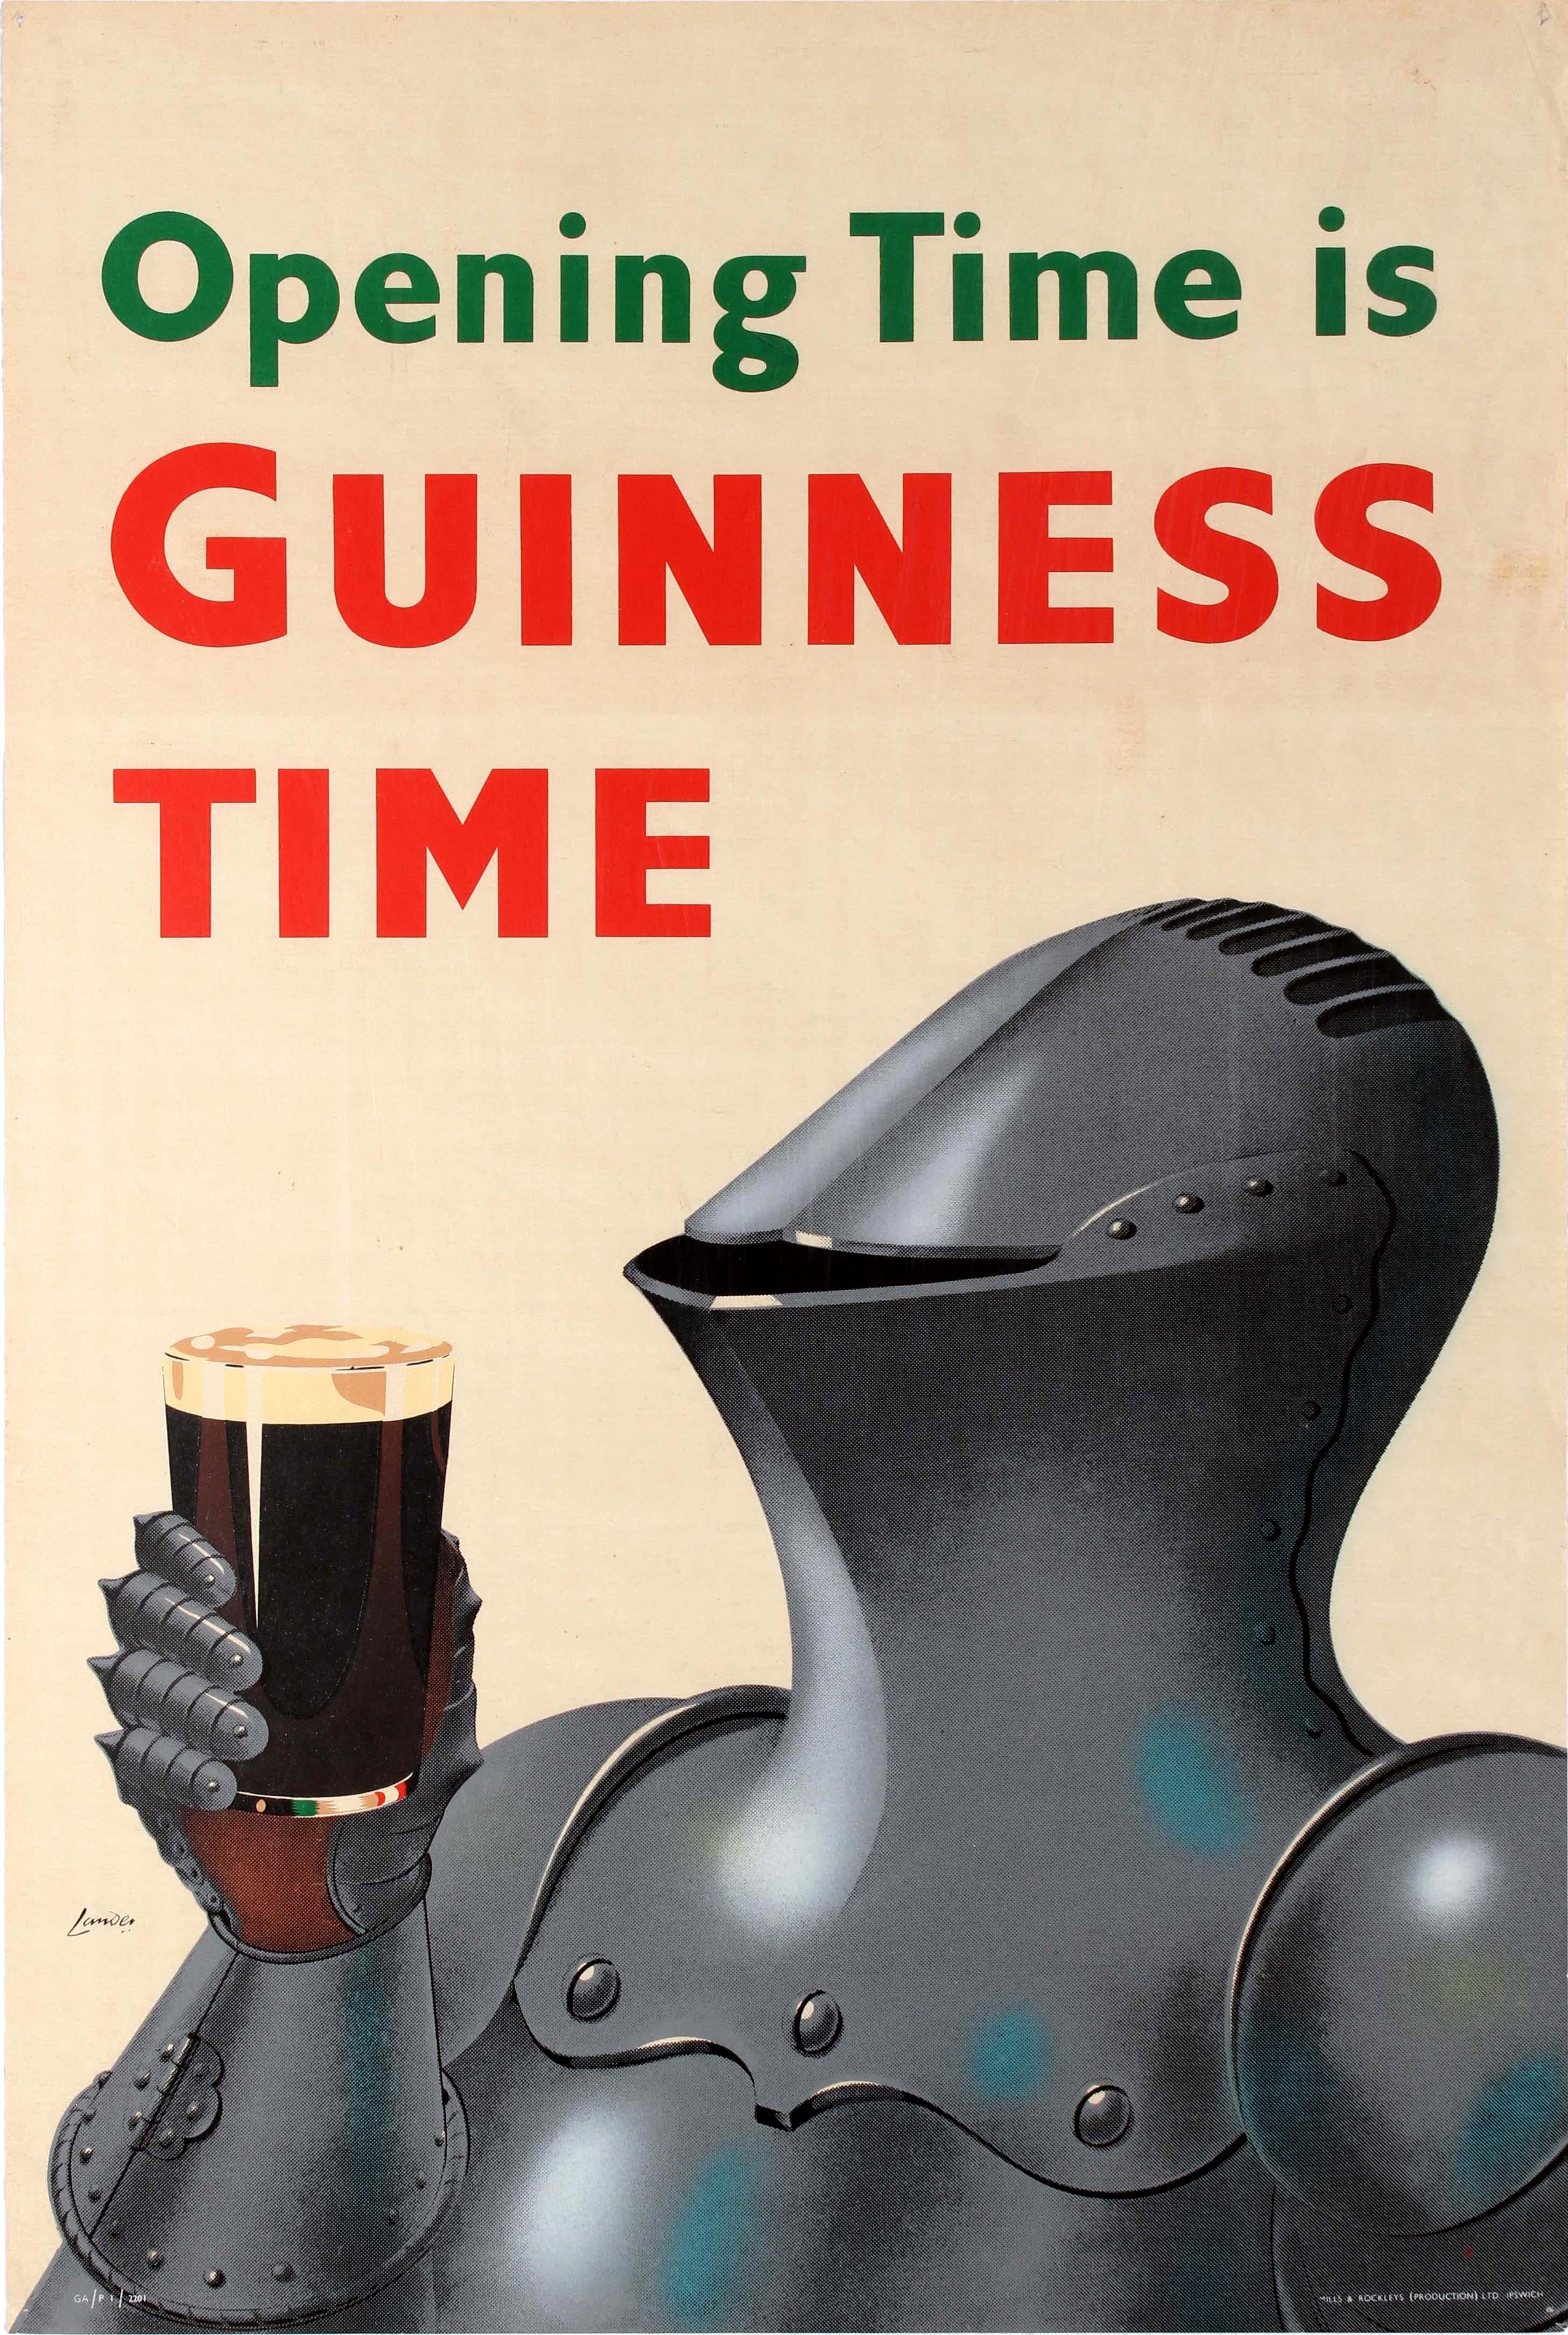 Eric Lander Print - Original Vintage Opening Time Is Guinness Time Poster Knight Design Drink Advert